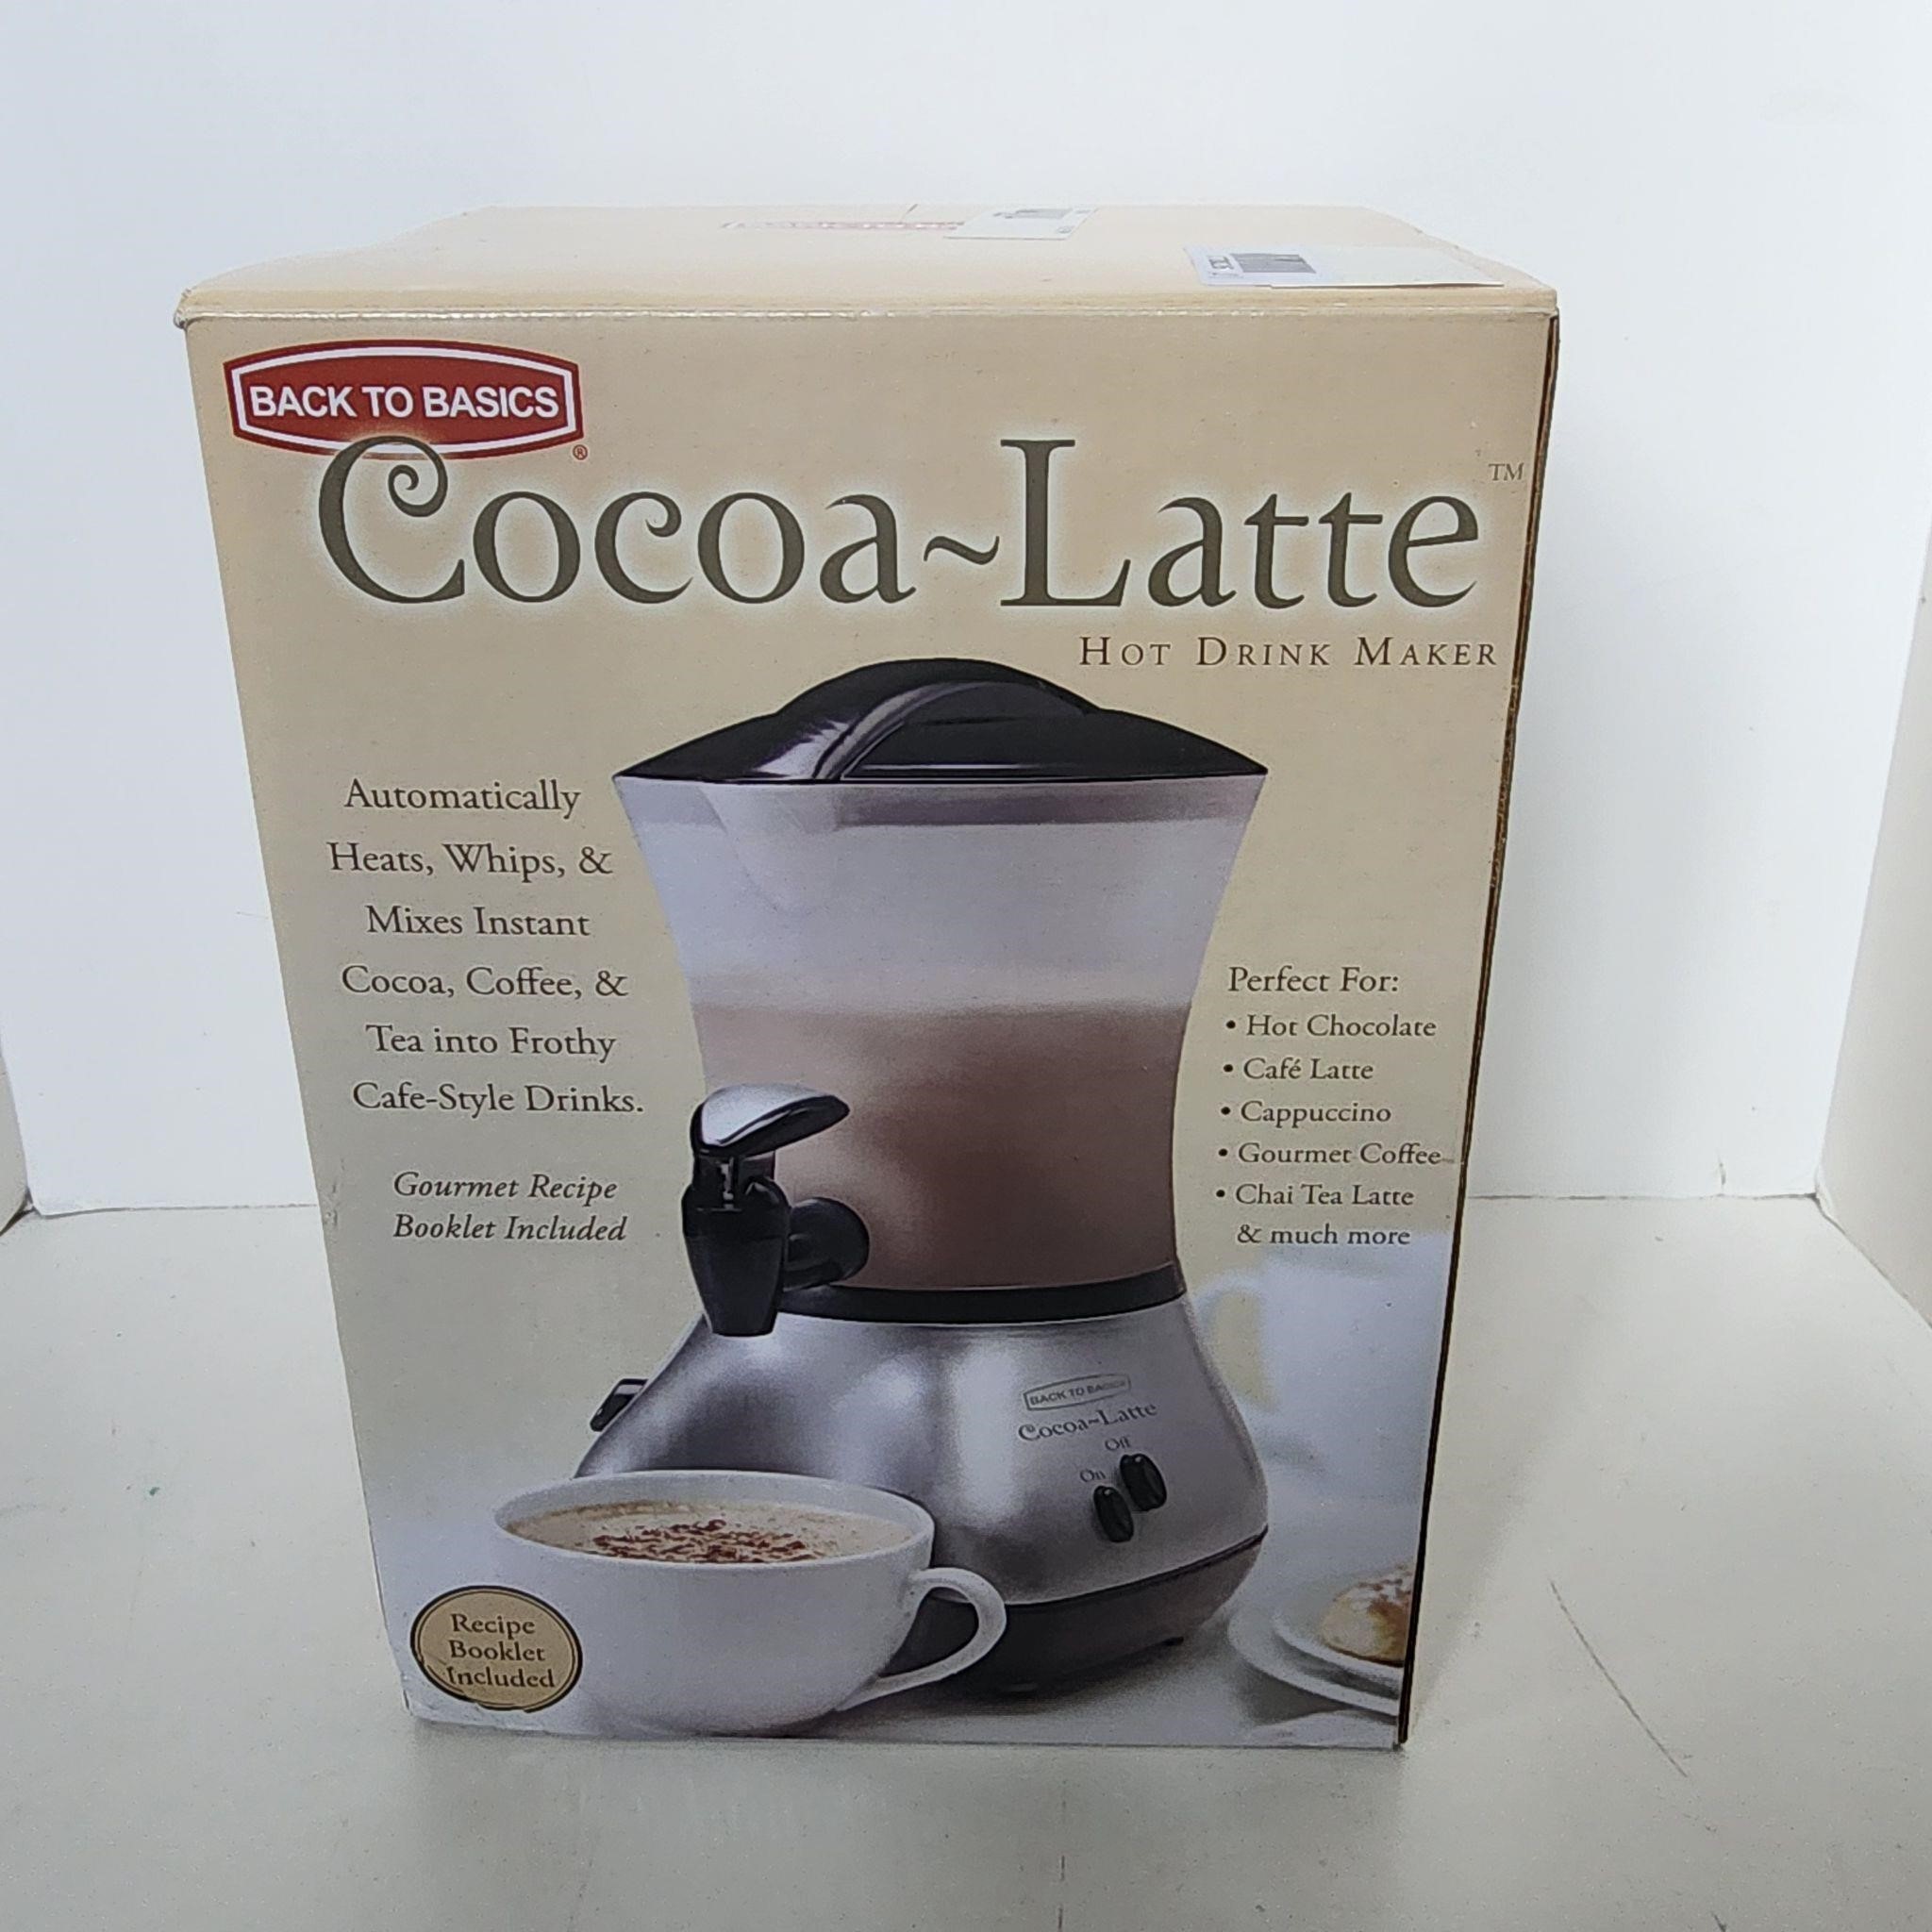 Cocoa Latte Hot Drink Maker